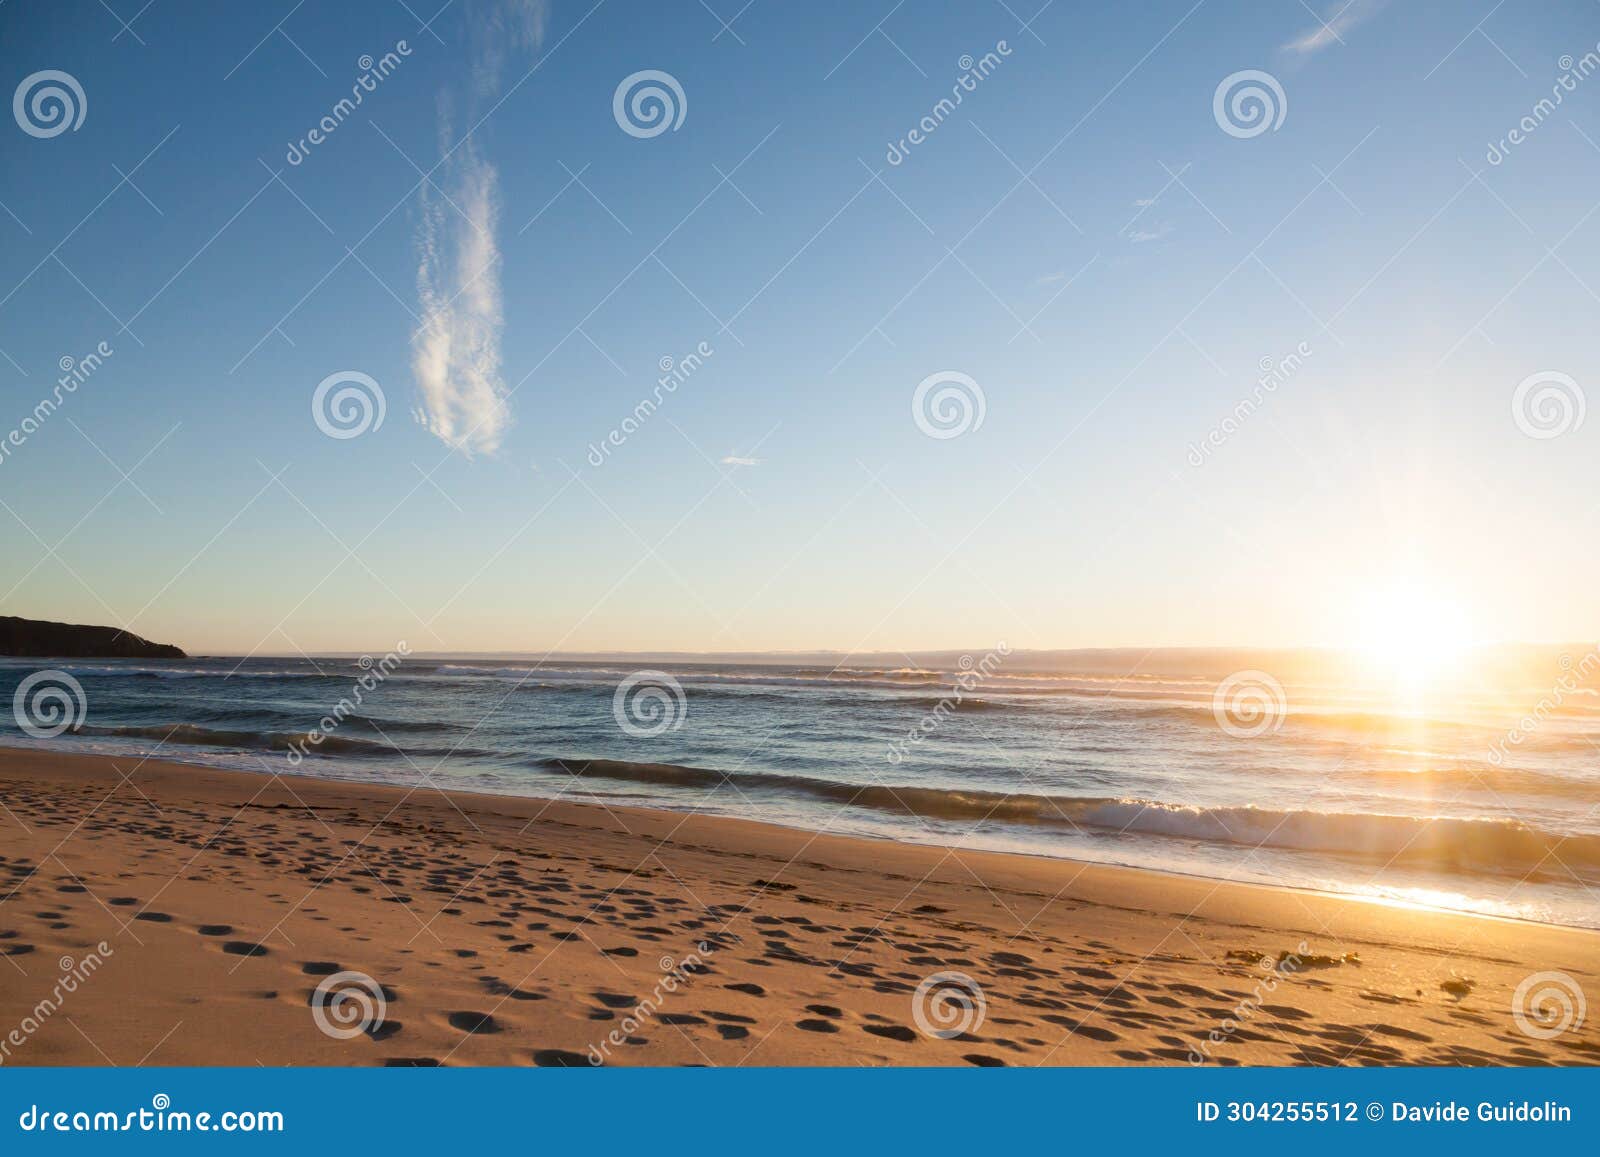 galician beach landscape, galicia, spain. do rostro beach